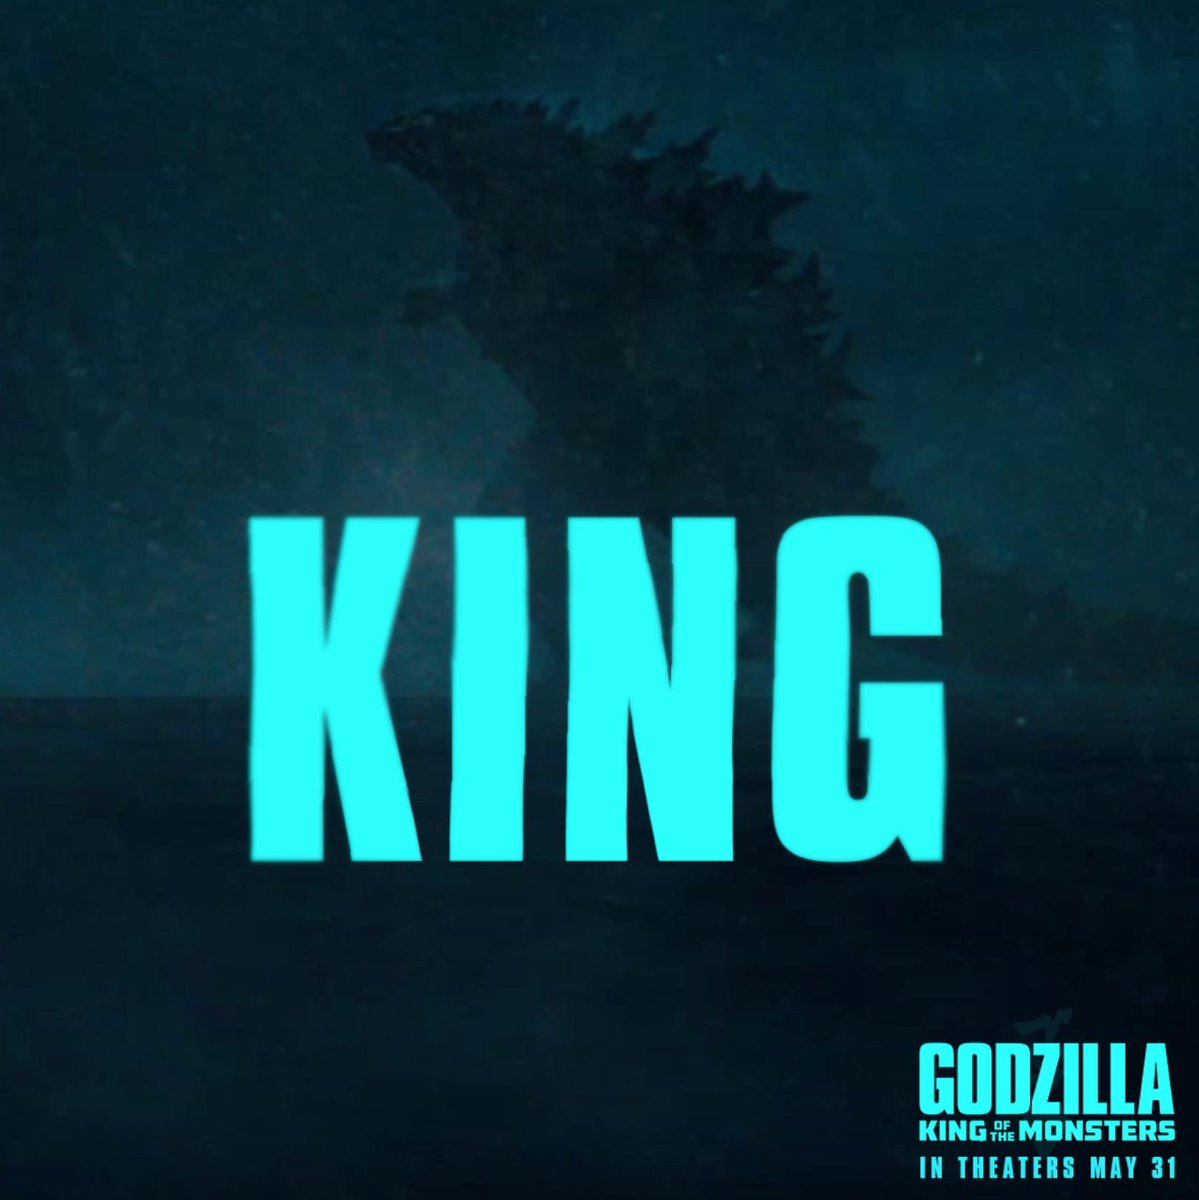 RT @GodzillaMovie: One King to rule them all. #GodzillaMovie in theaters May 31. https://t.co/CNZdup62ZK